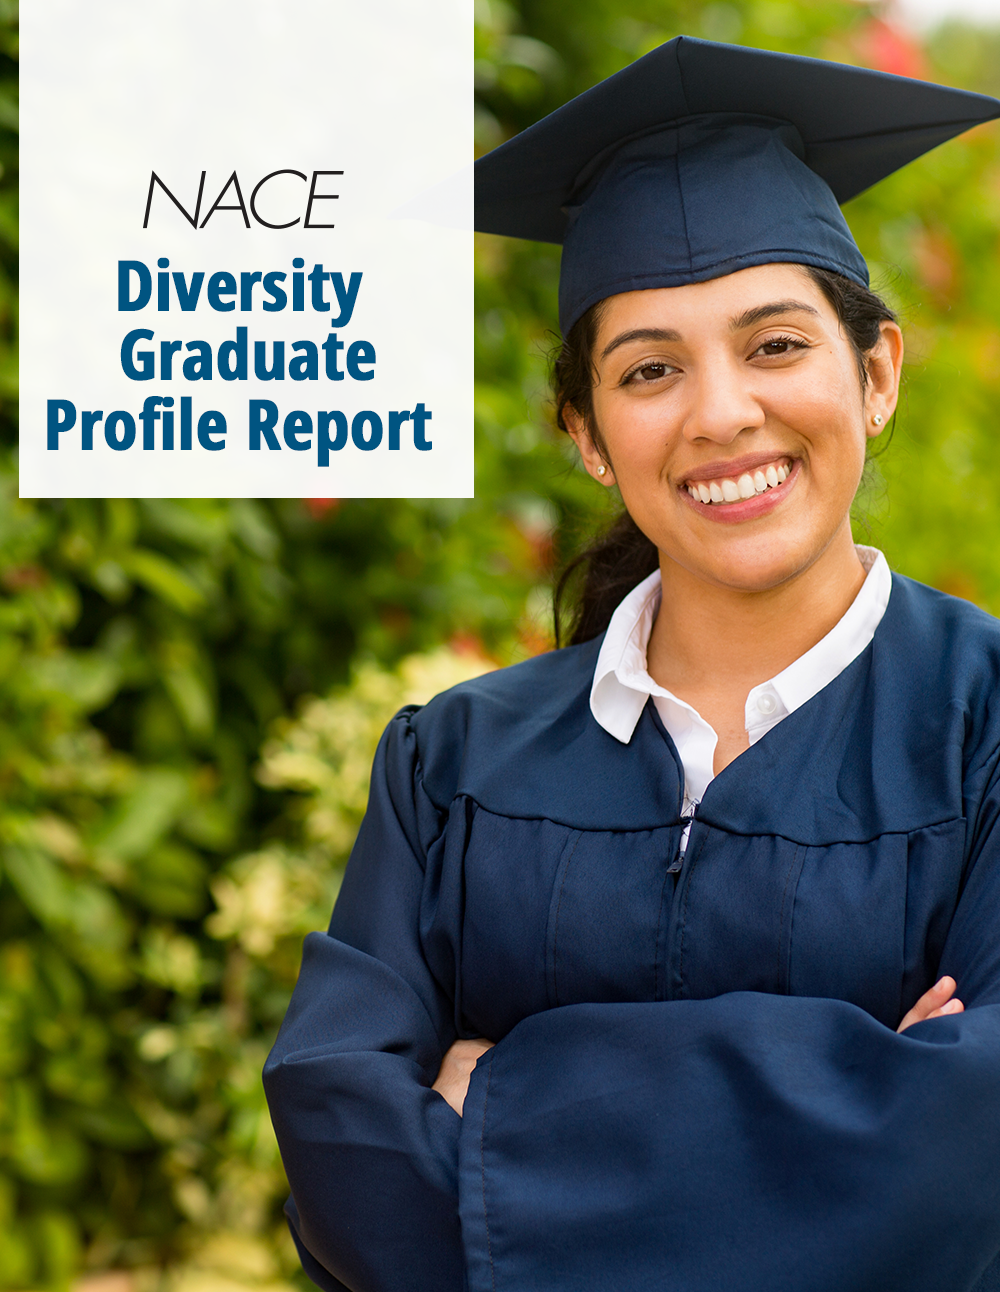 NACE Diversity Graduate Profile Report: NACE Diversity Graduate Profile Report: Interdisciplinary Studies